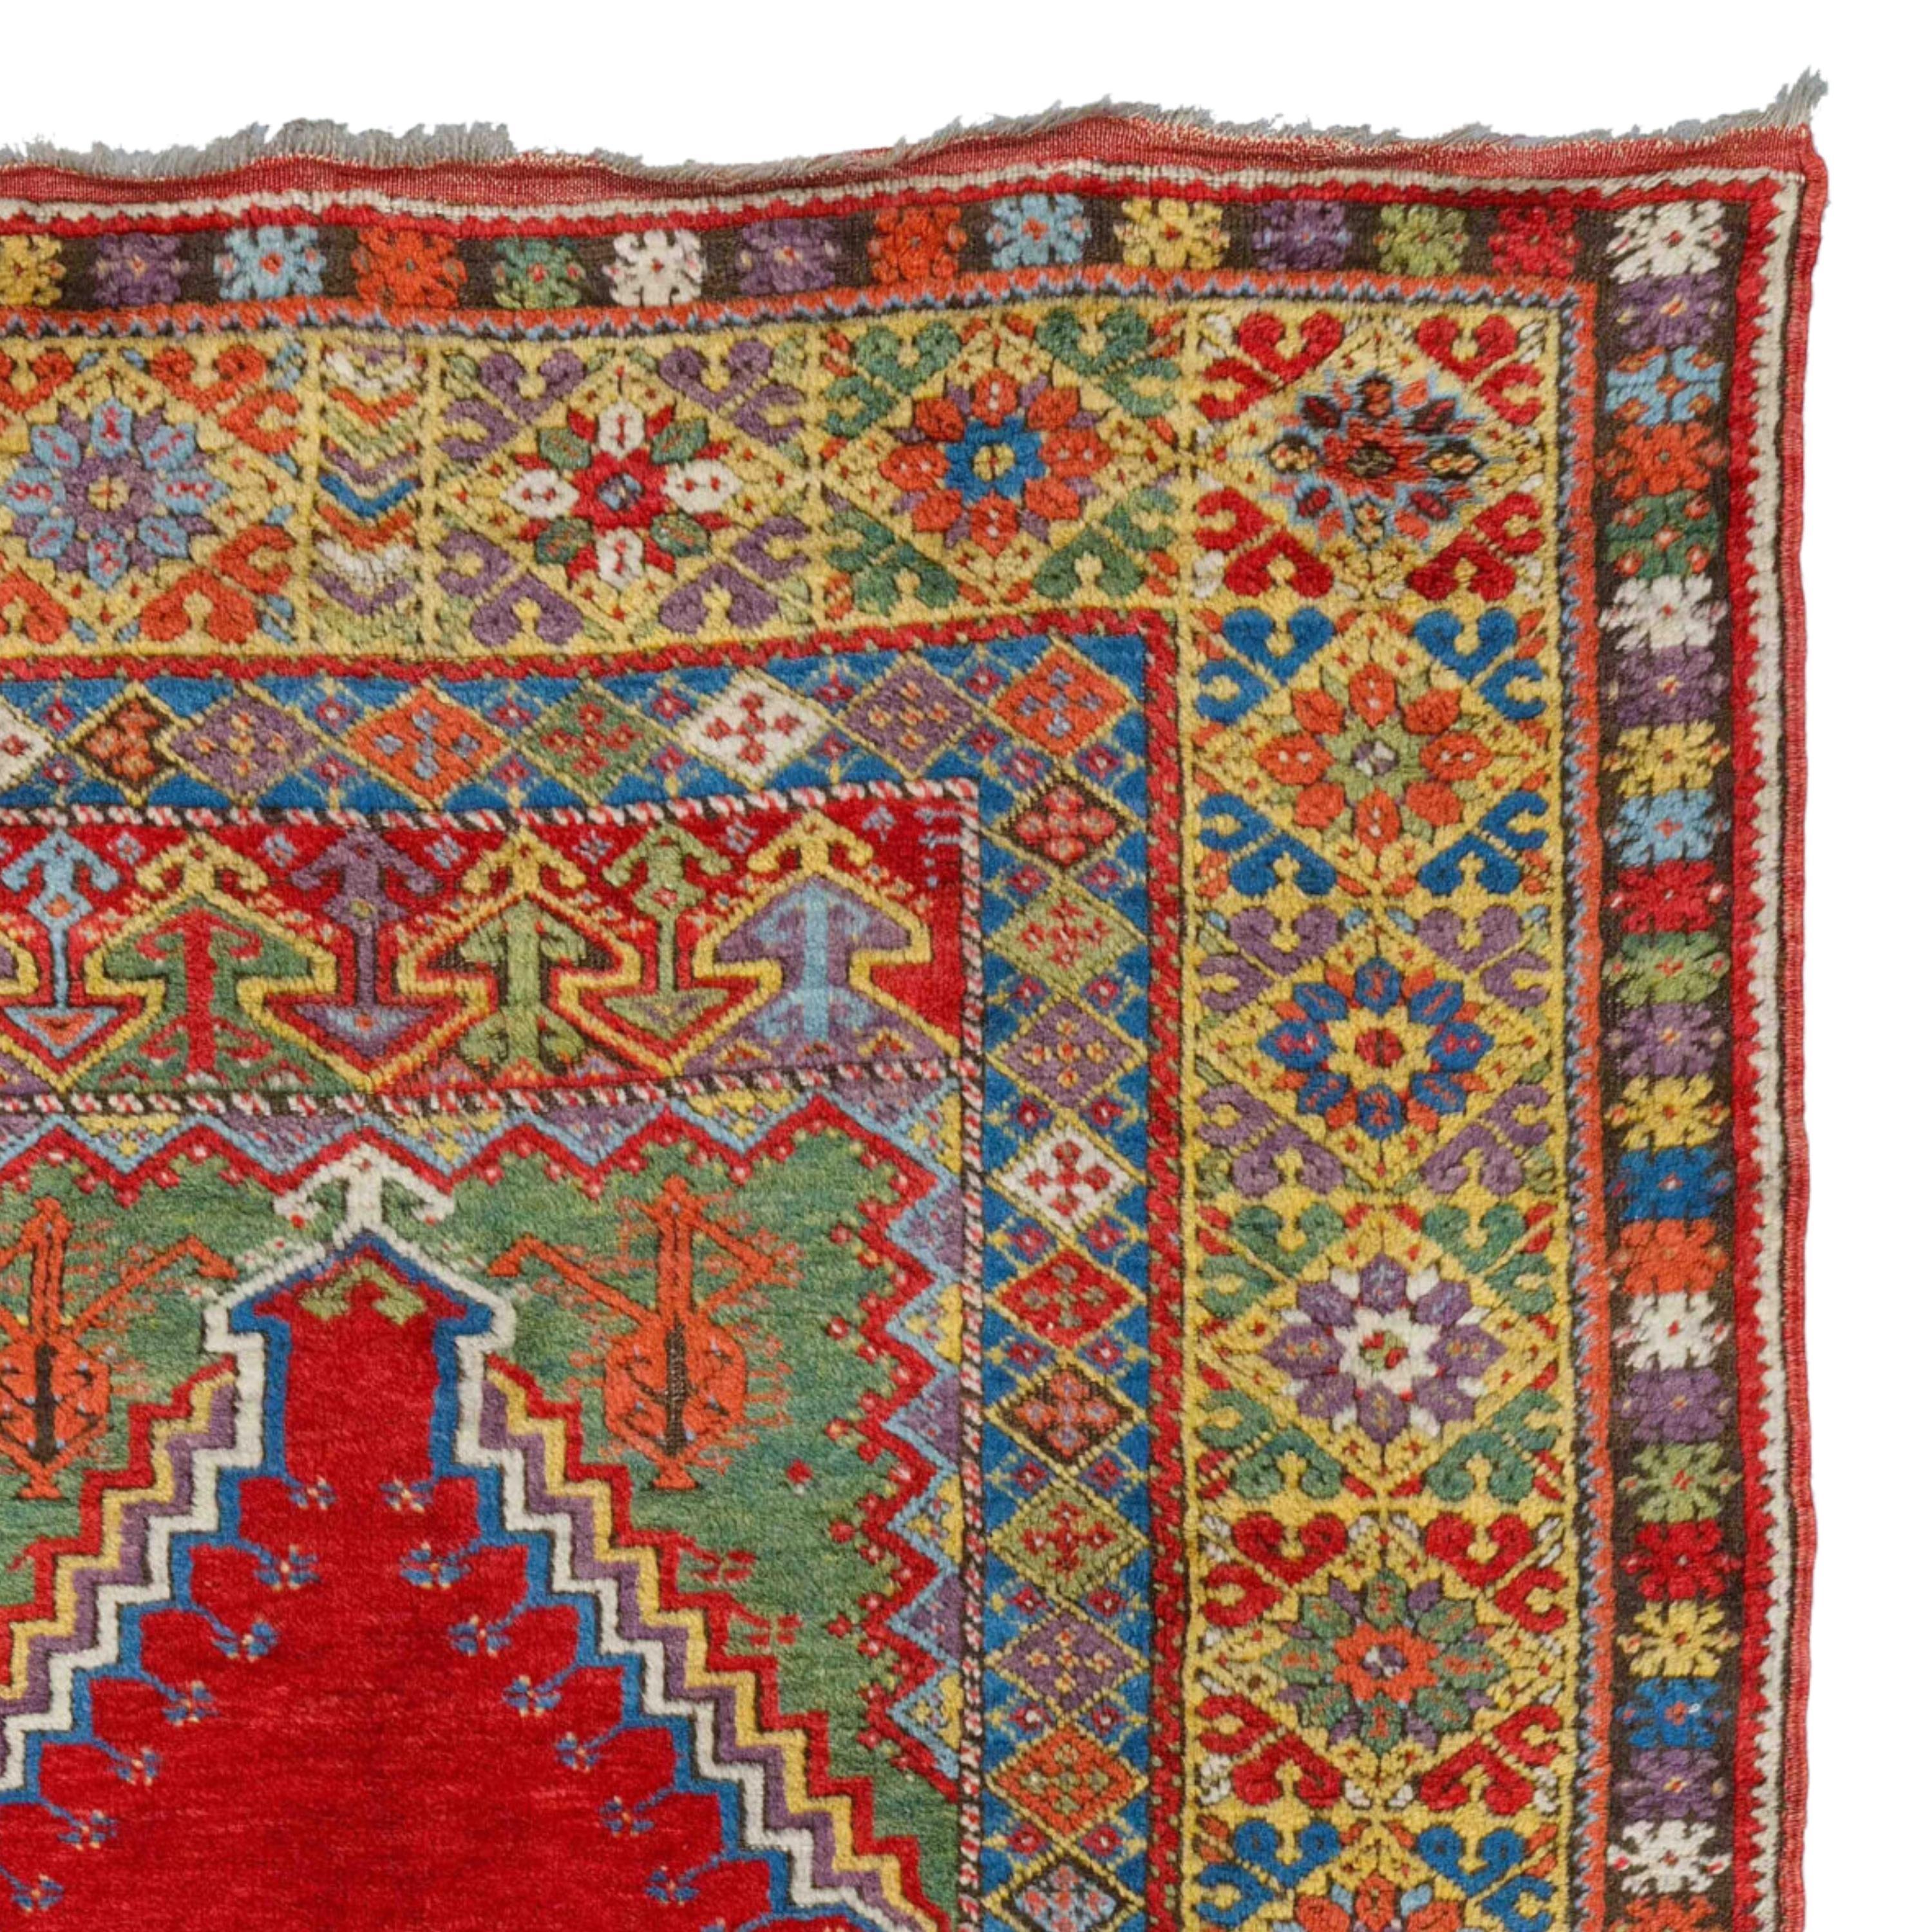 Antique Mudjur Rug - 19th Century Central Anatolia Mudjur Prayer Rug In Good Condition For Sale In Sultanahmet, 34